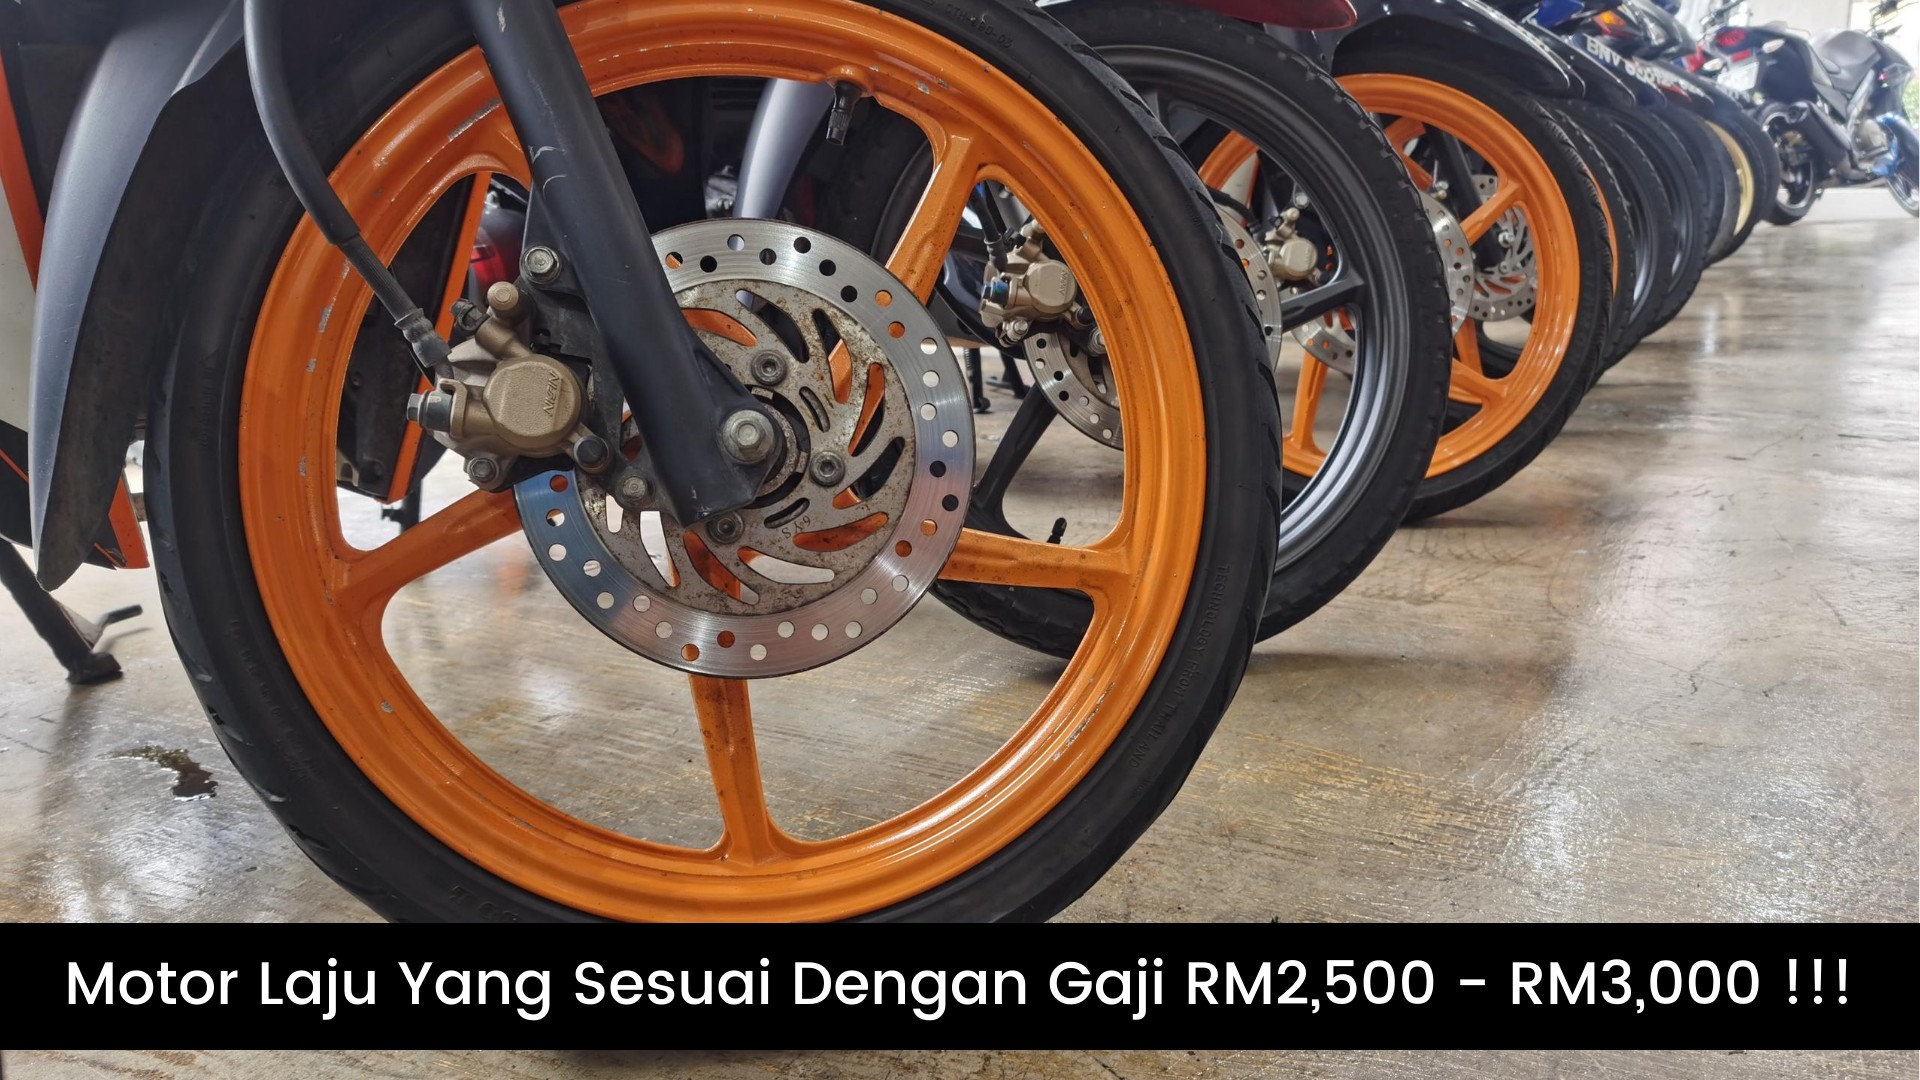 Beli motosikal tanpa komitmen tinggi, orang bergaji bawah RM3,000 mampu milik!